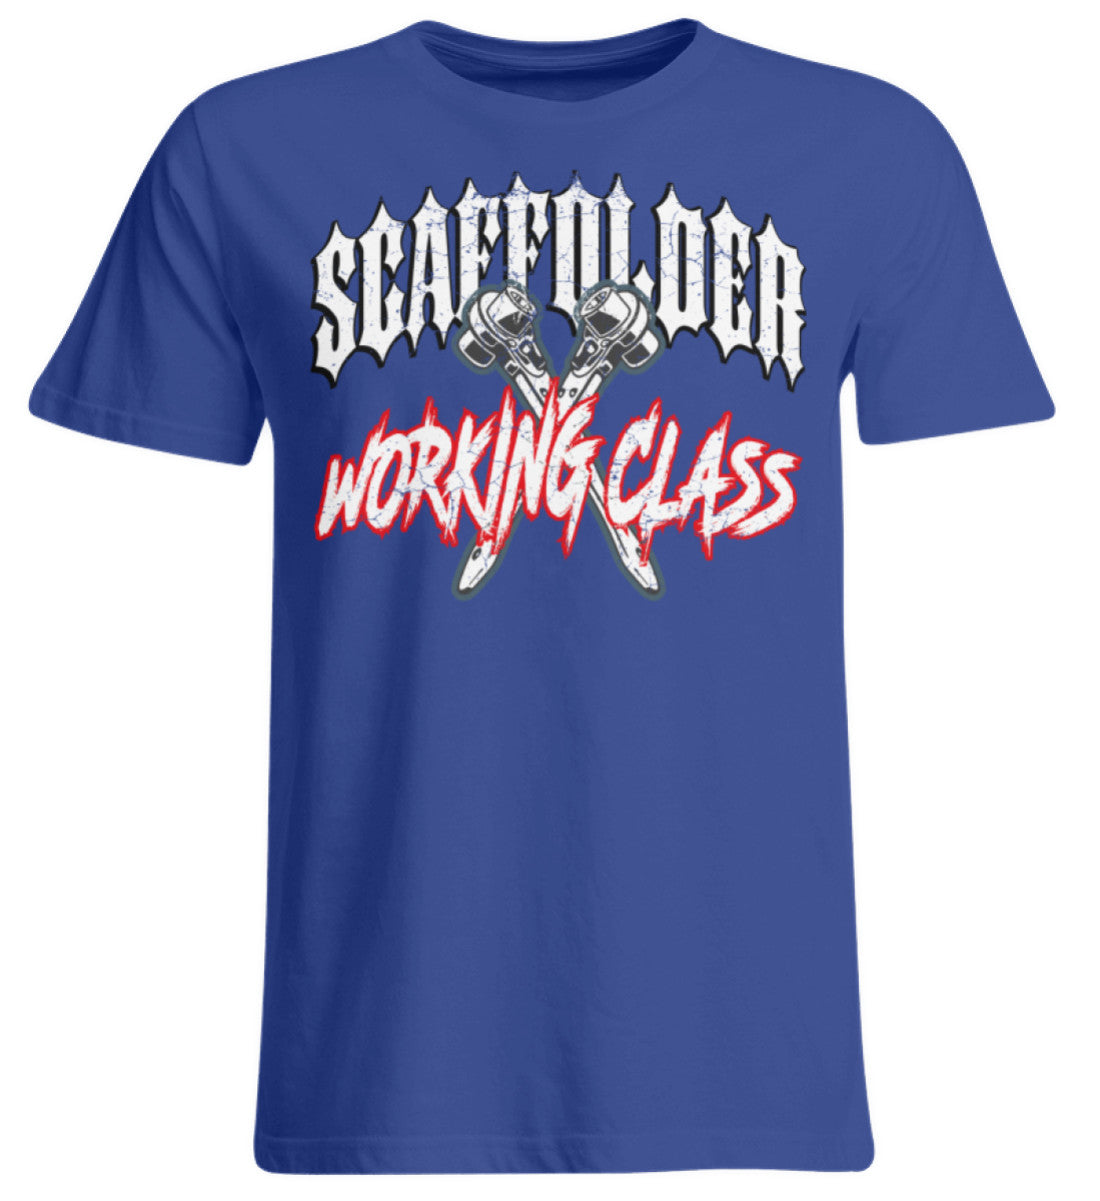 Scaffolder Working Class  - Übergrößenshirt €24.95 Gerüstbauer - Shop >>